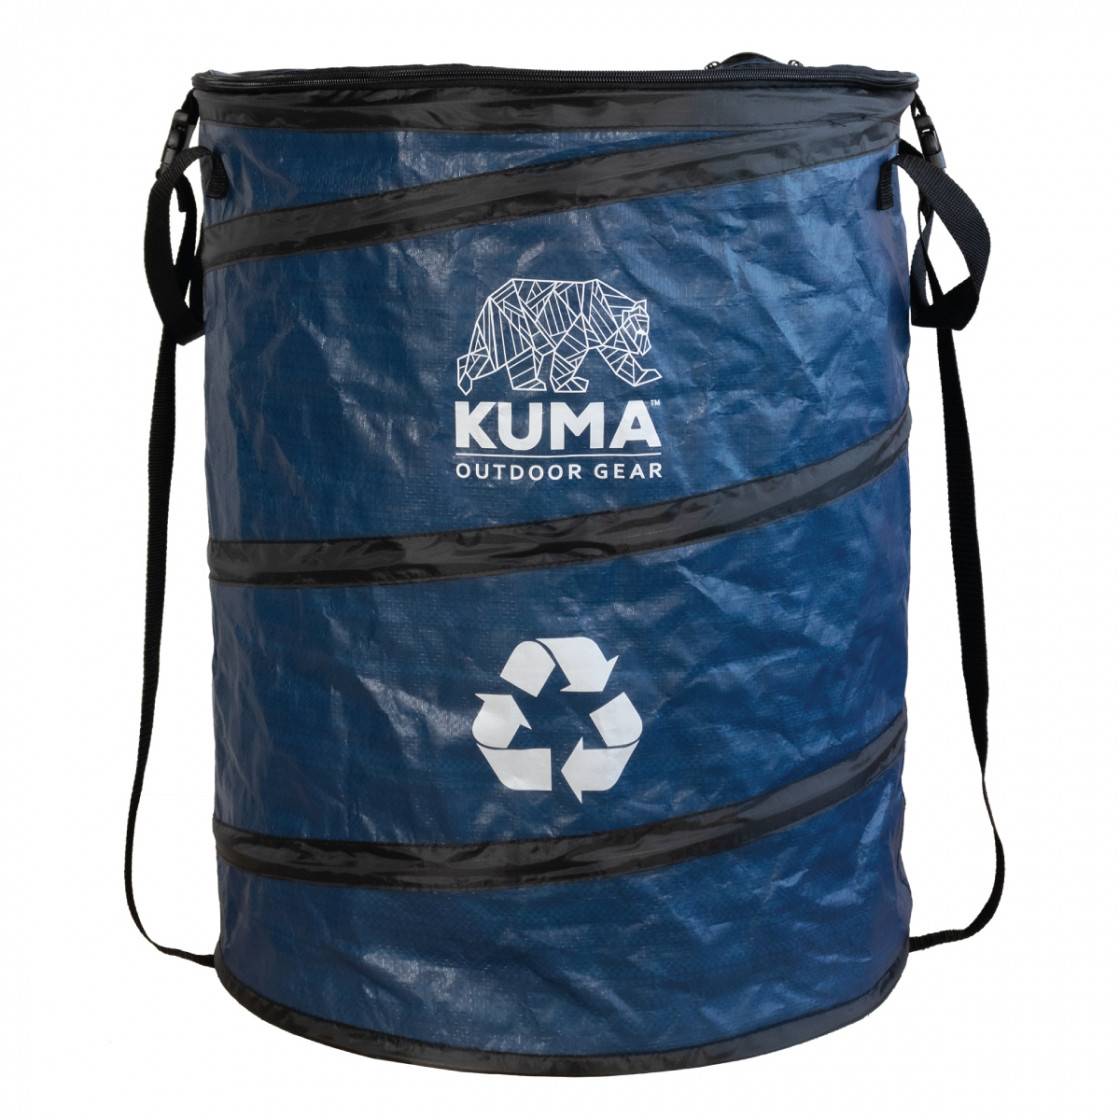 Kuma Pop Up Recycle Bin